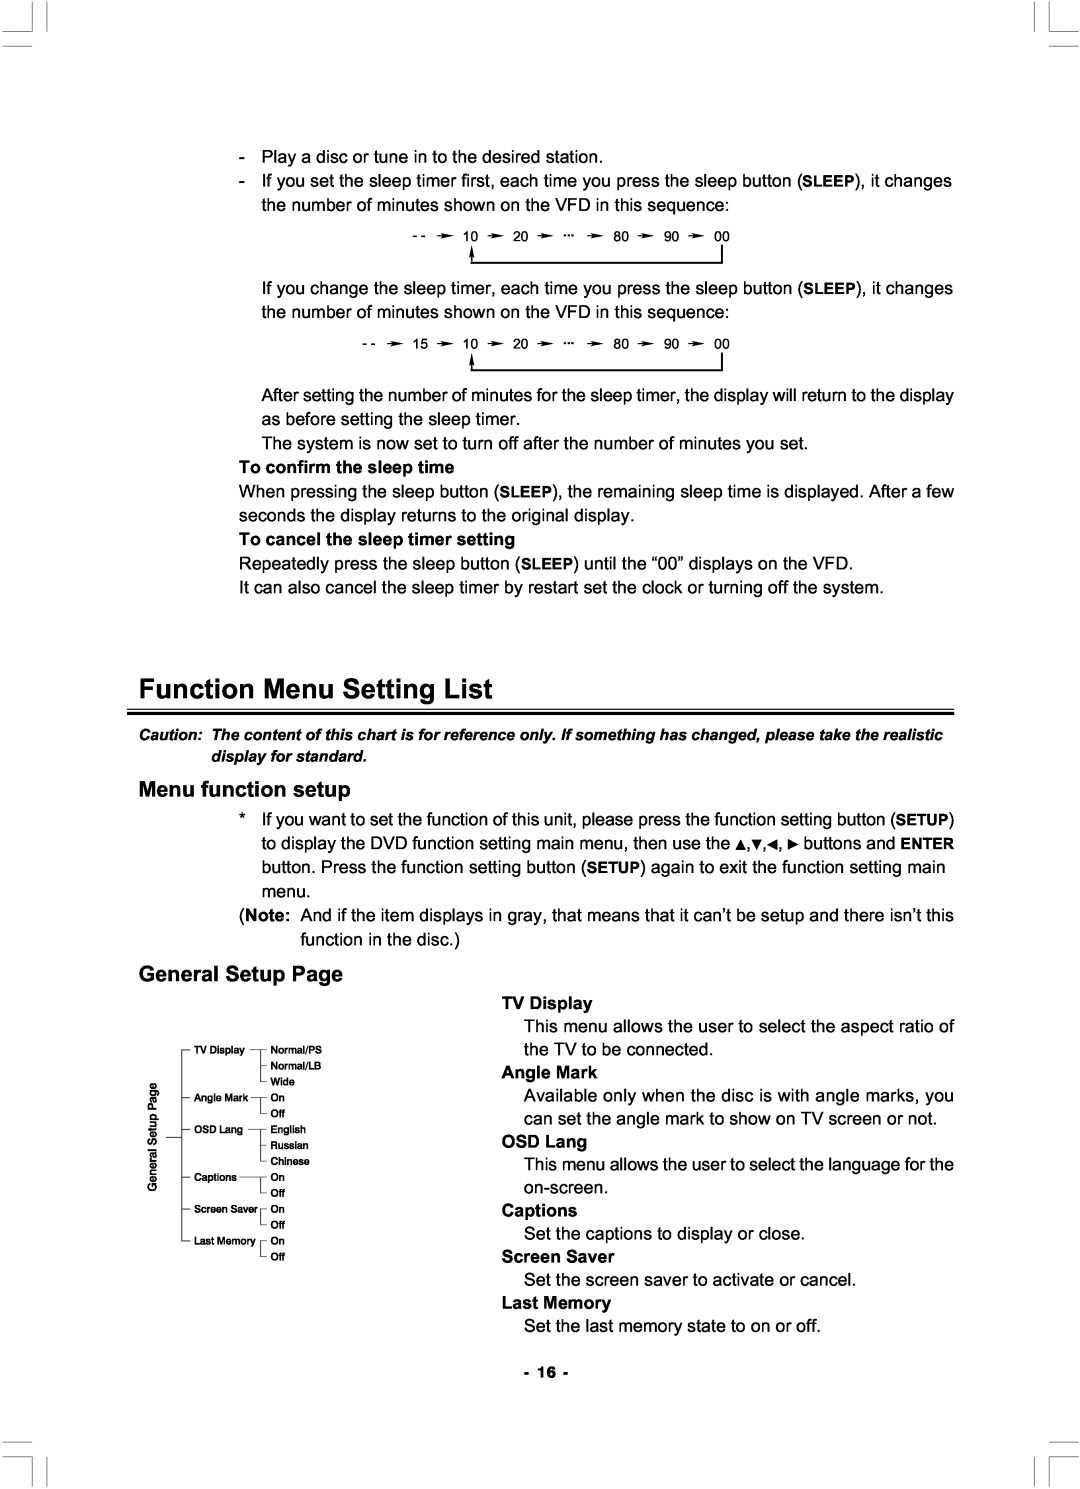 Hyundai H-MS1100 manual Function Menu Setting List, Menu function setup, General Setup Page 